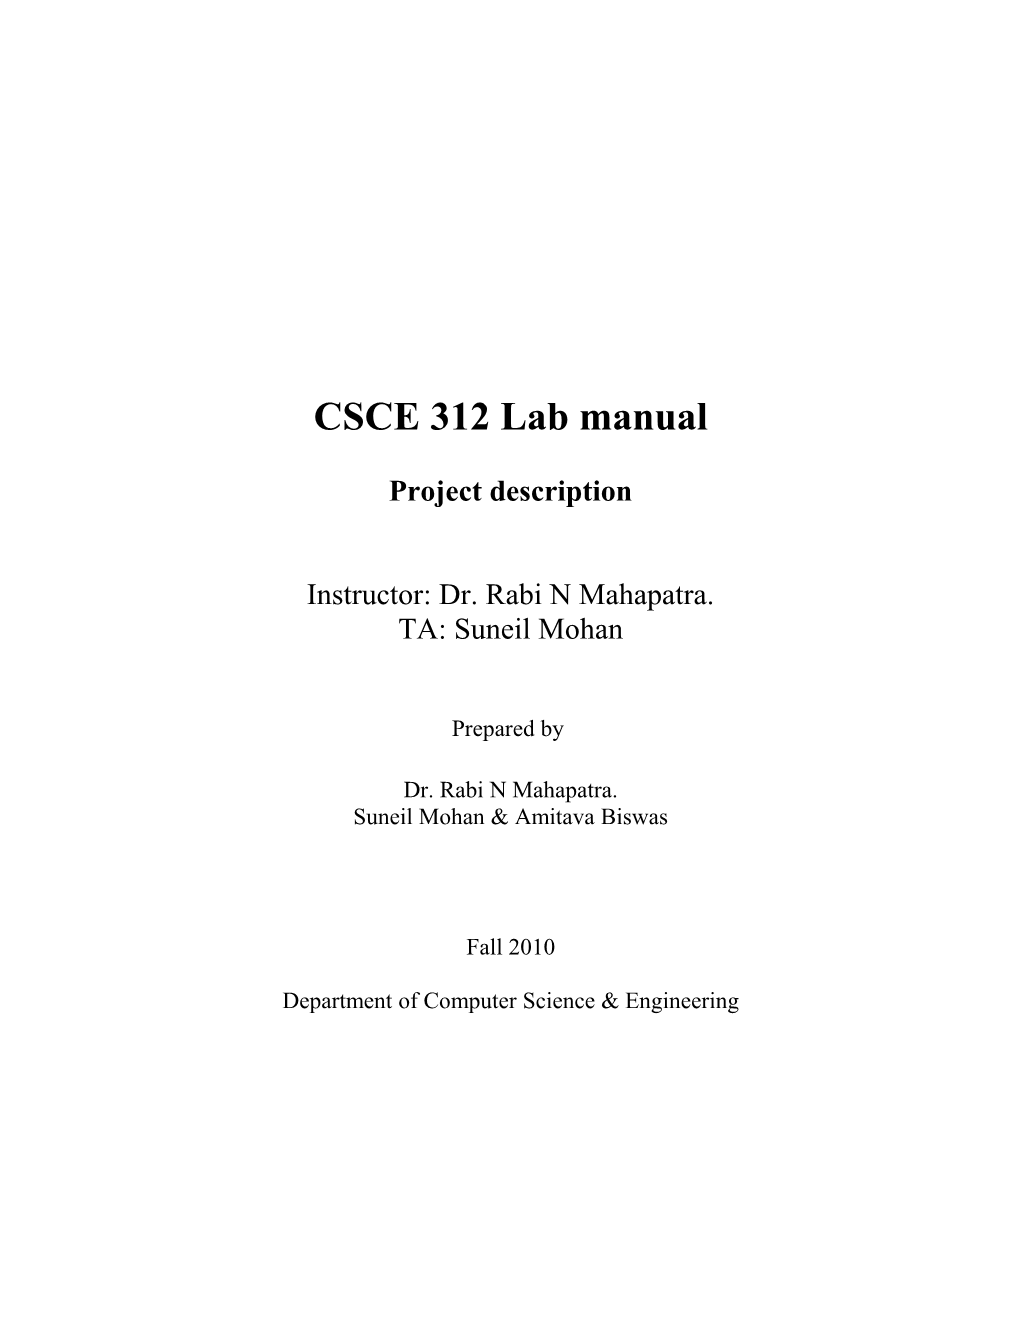 CPSC 312 Lab Manual